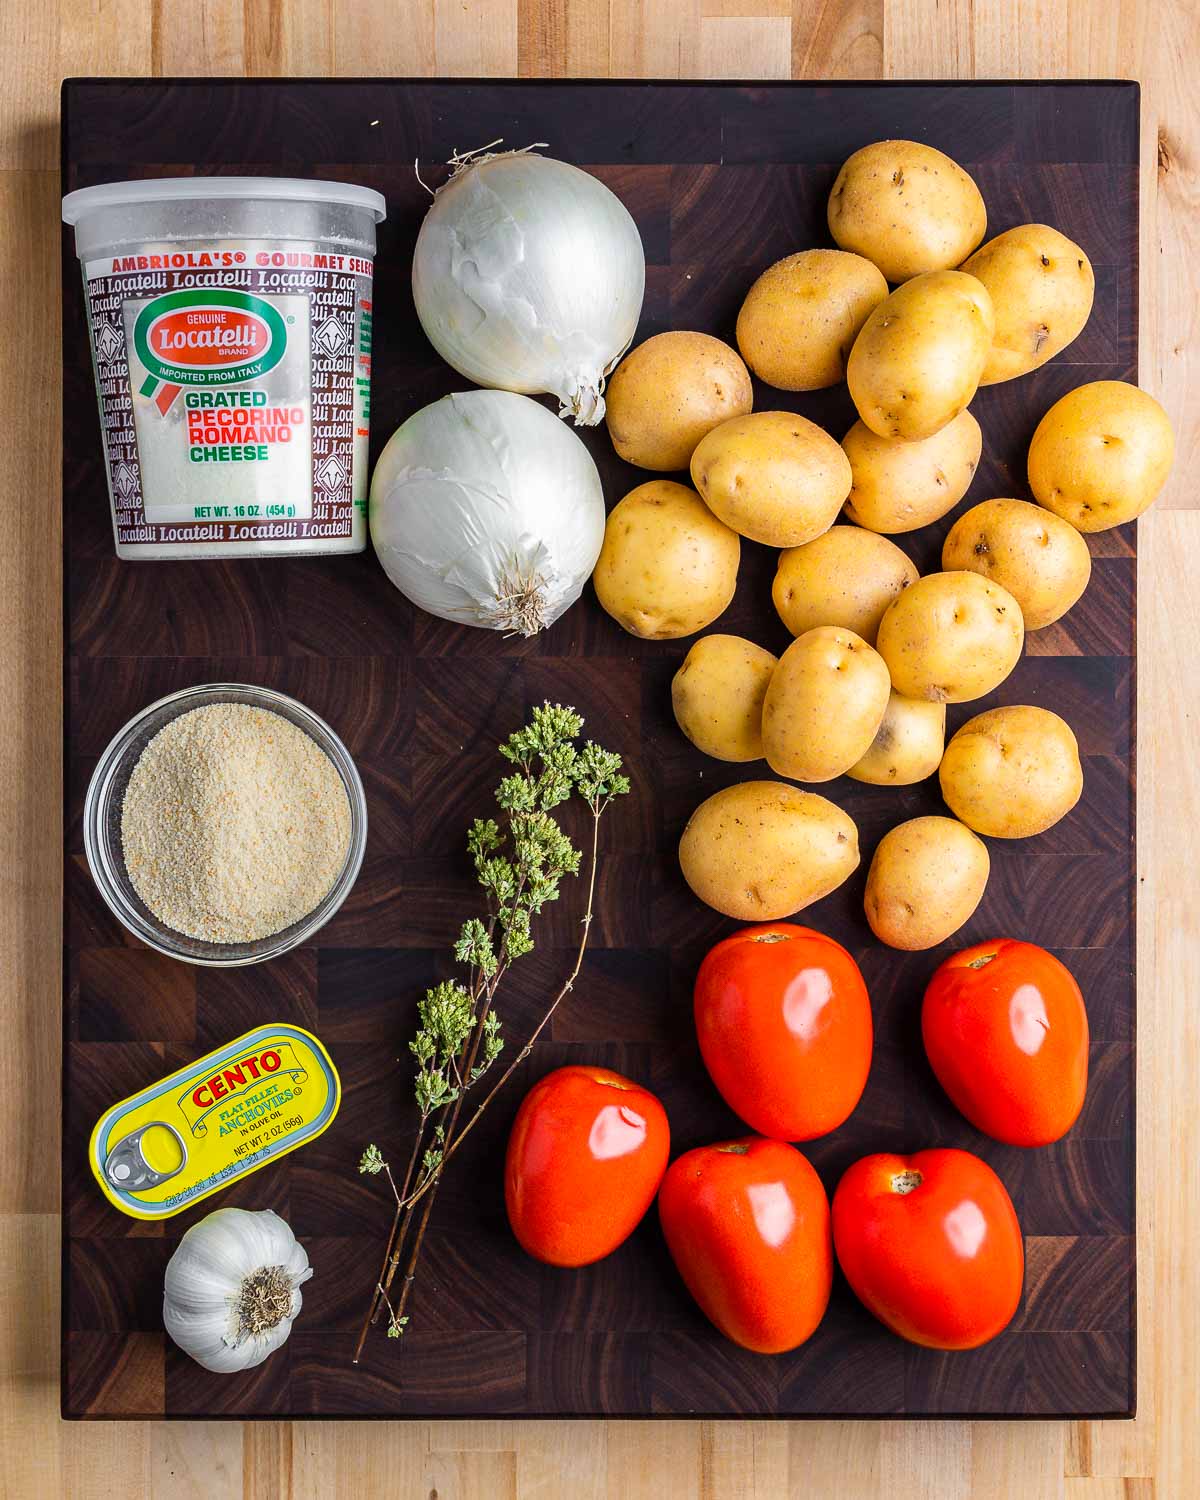 Ingredients shown: Pecorino, onions, potatoes, breadcrumbs, anchovies, garlic, oregano, and tomatoes.